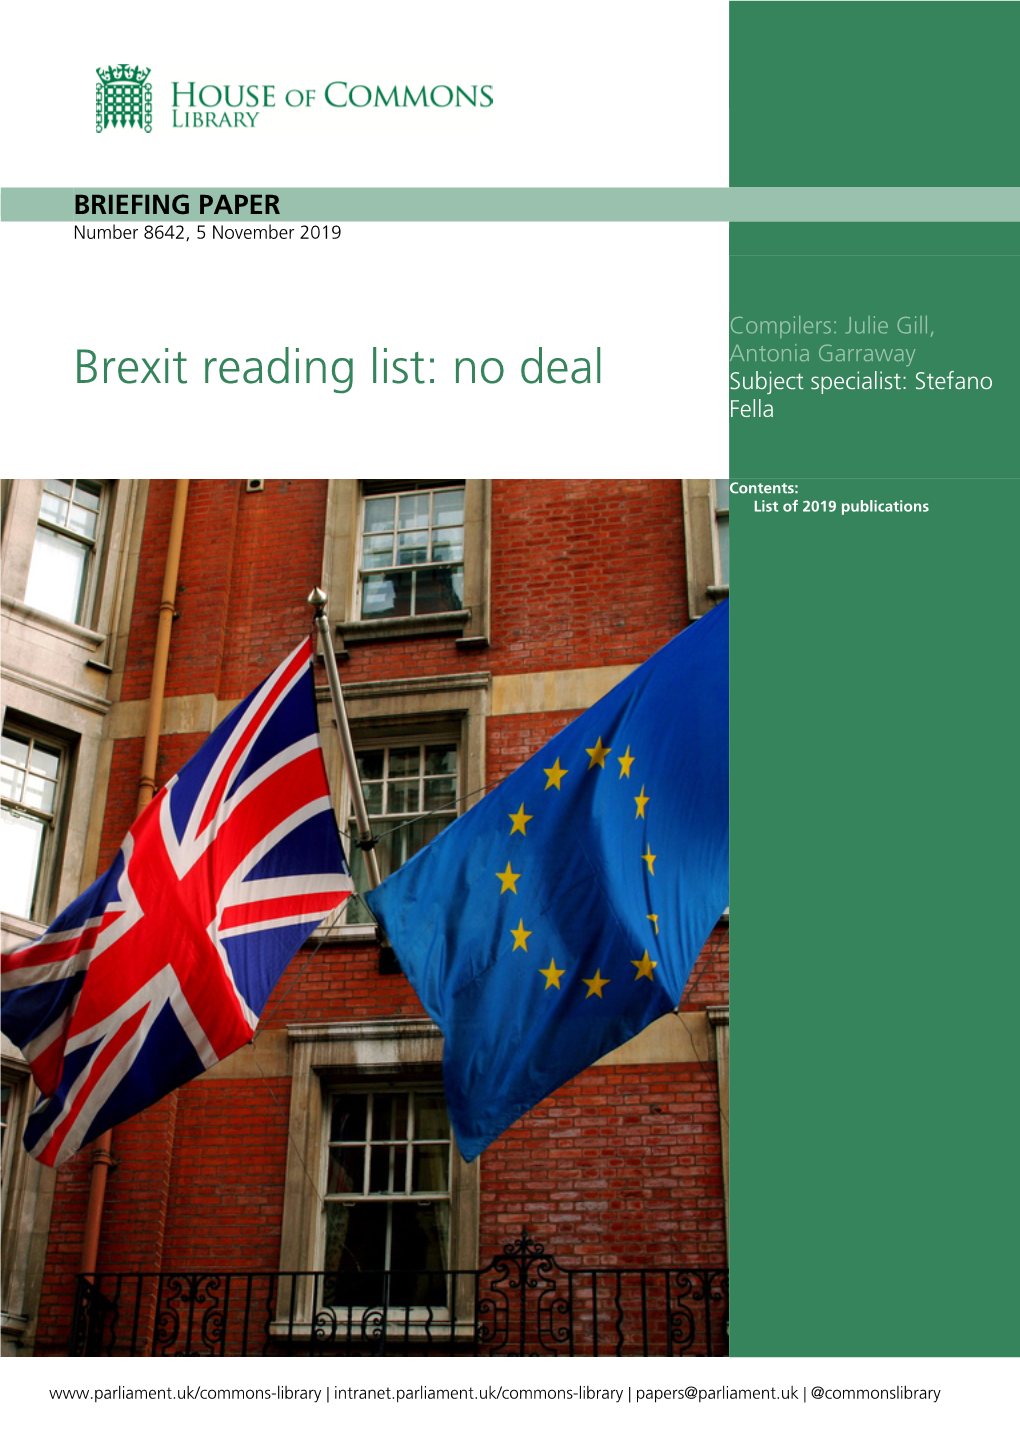 Brexit Reading List: No Deal Subject Specialist: Stefano Fella